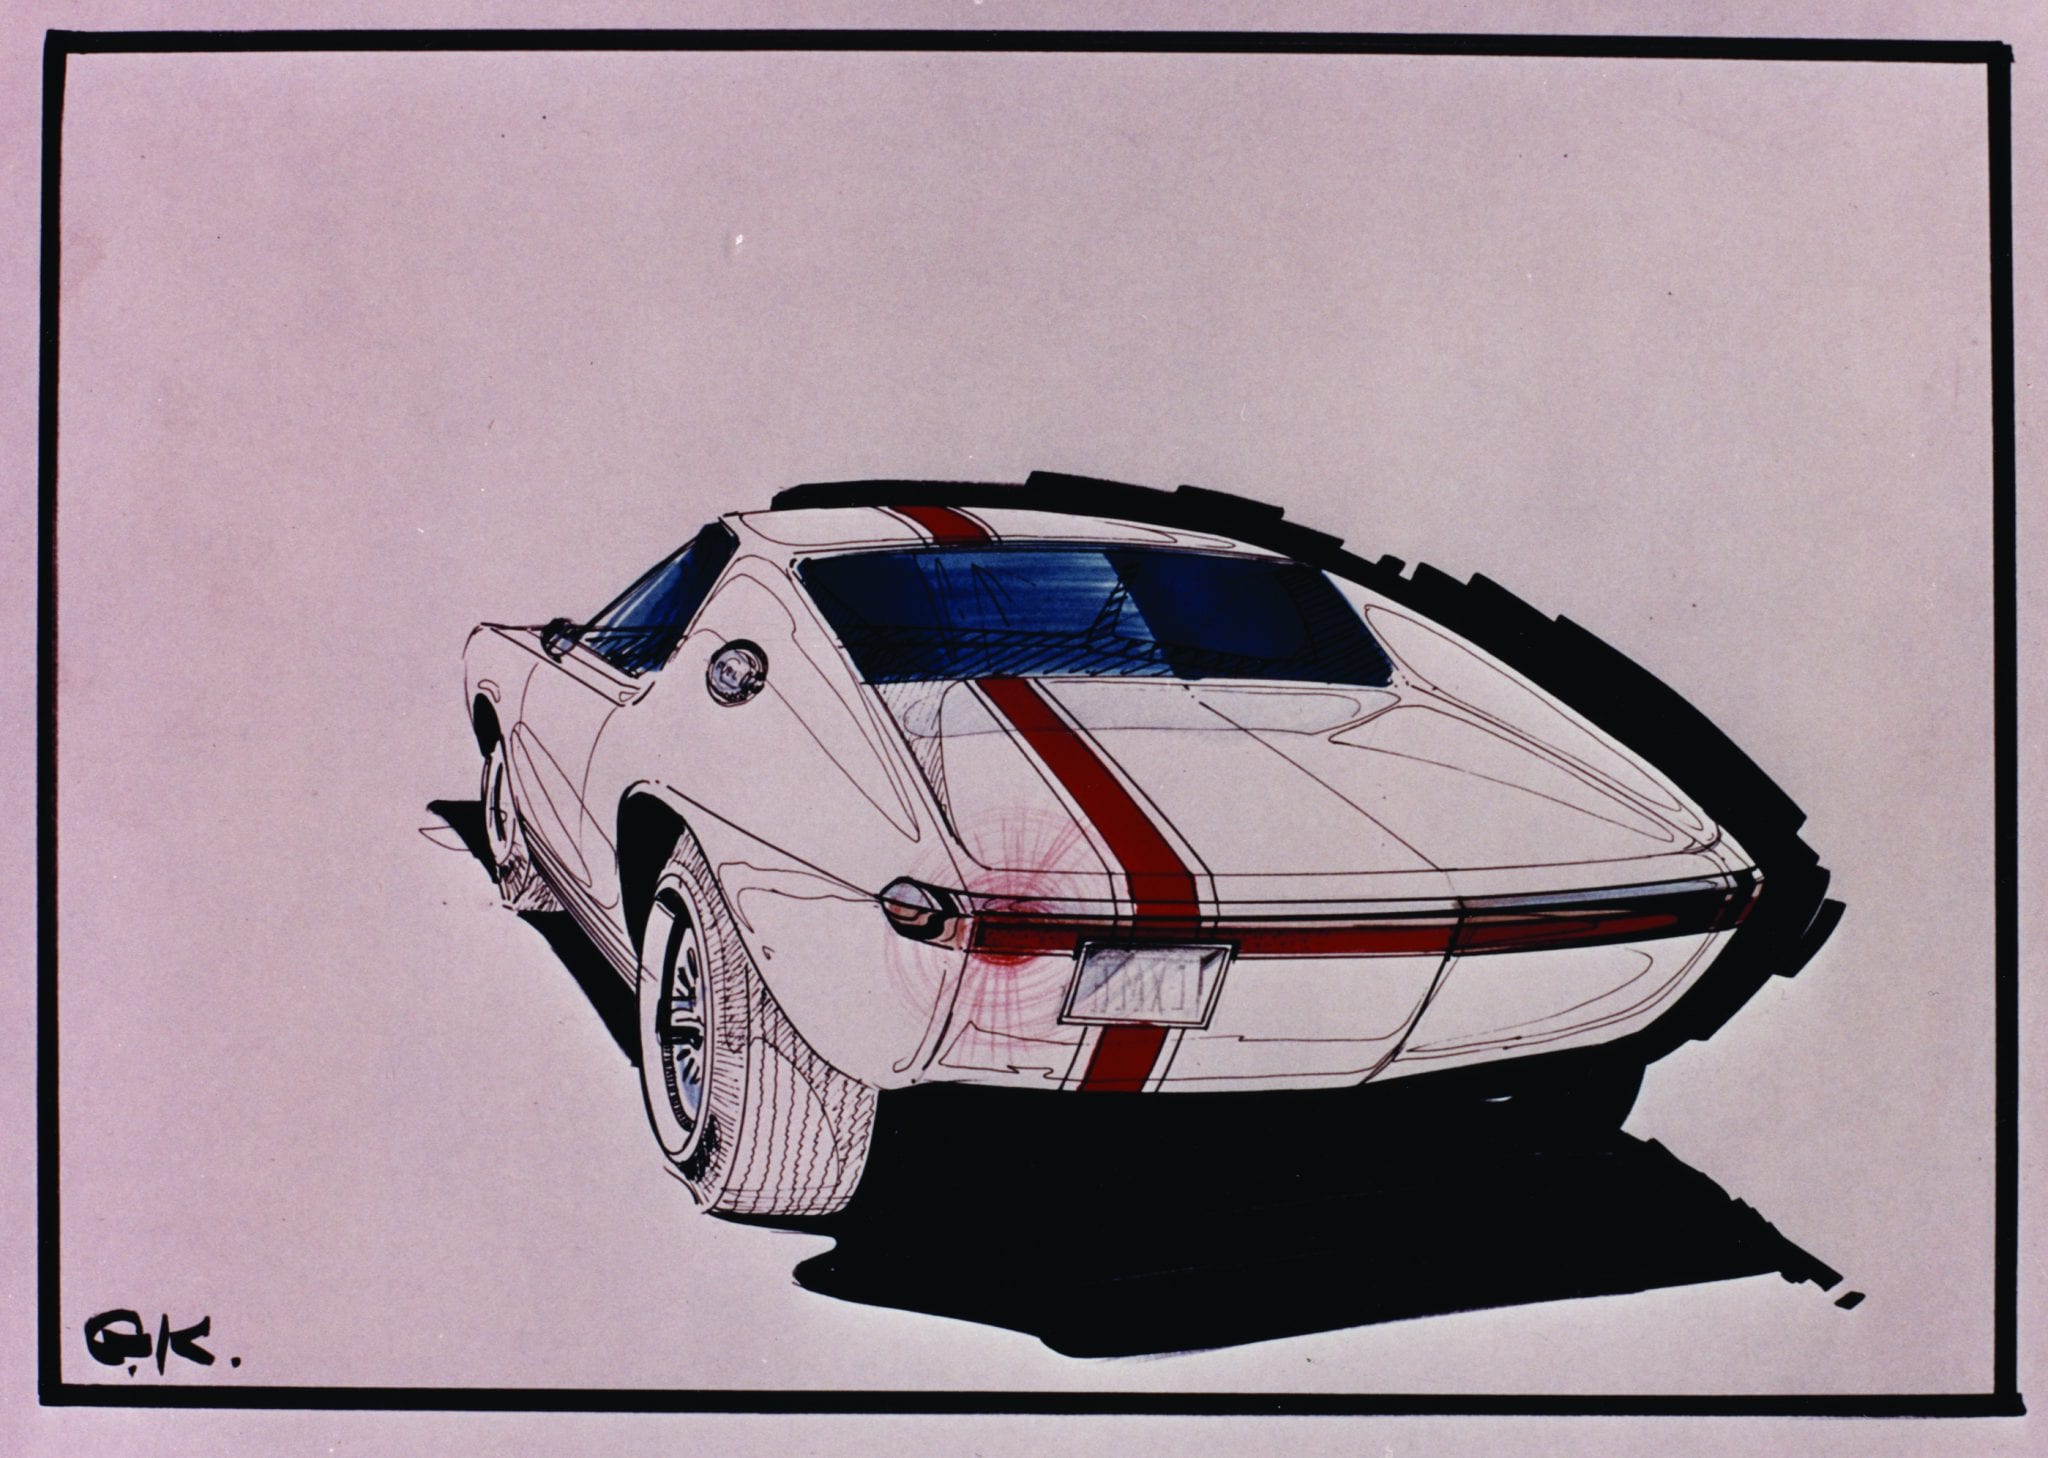 Concept AMX Rendering by George Krispinsky